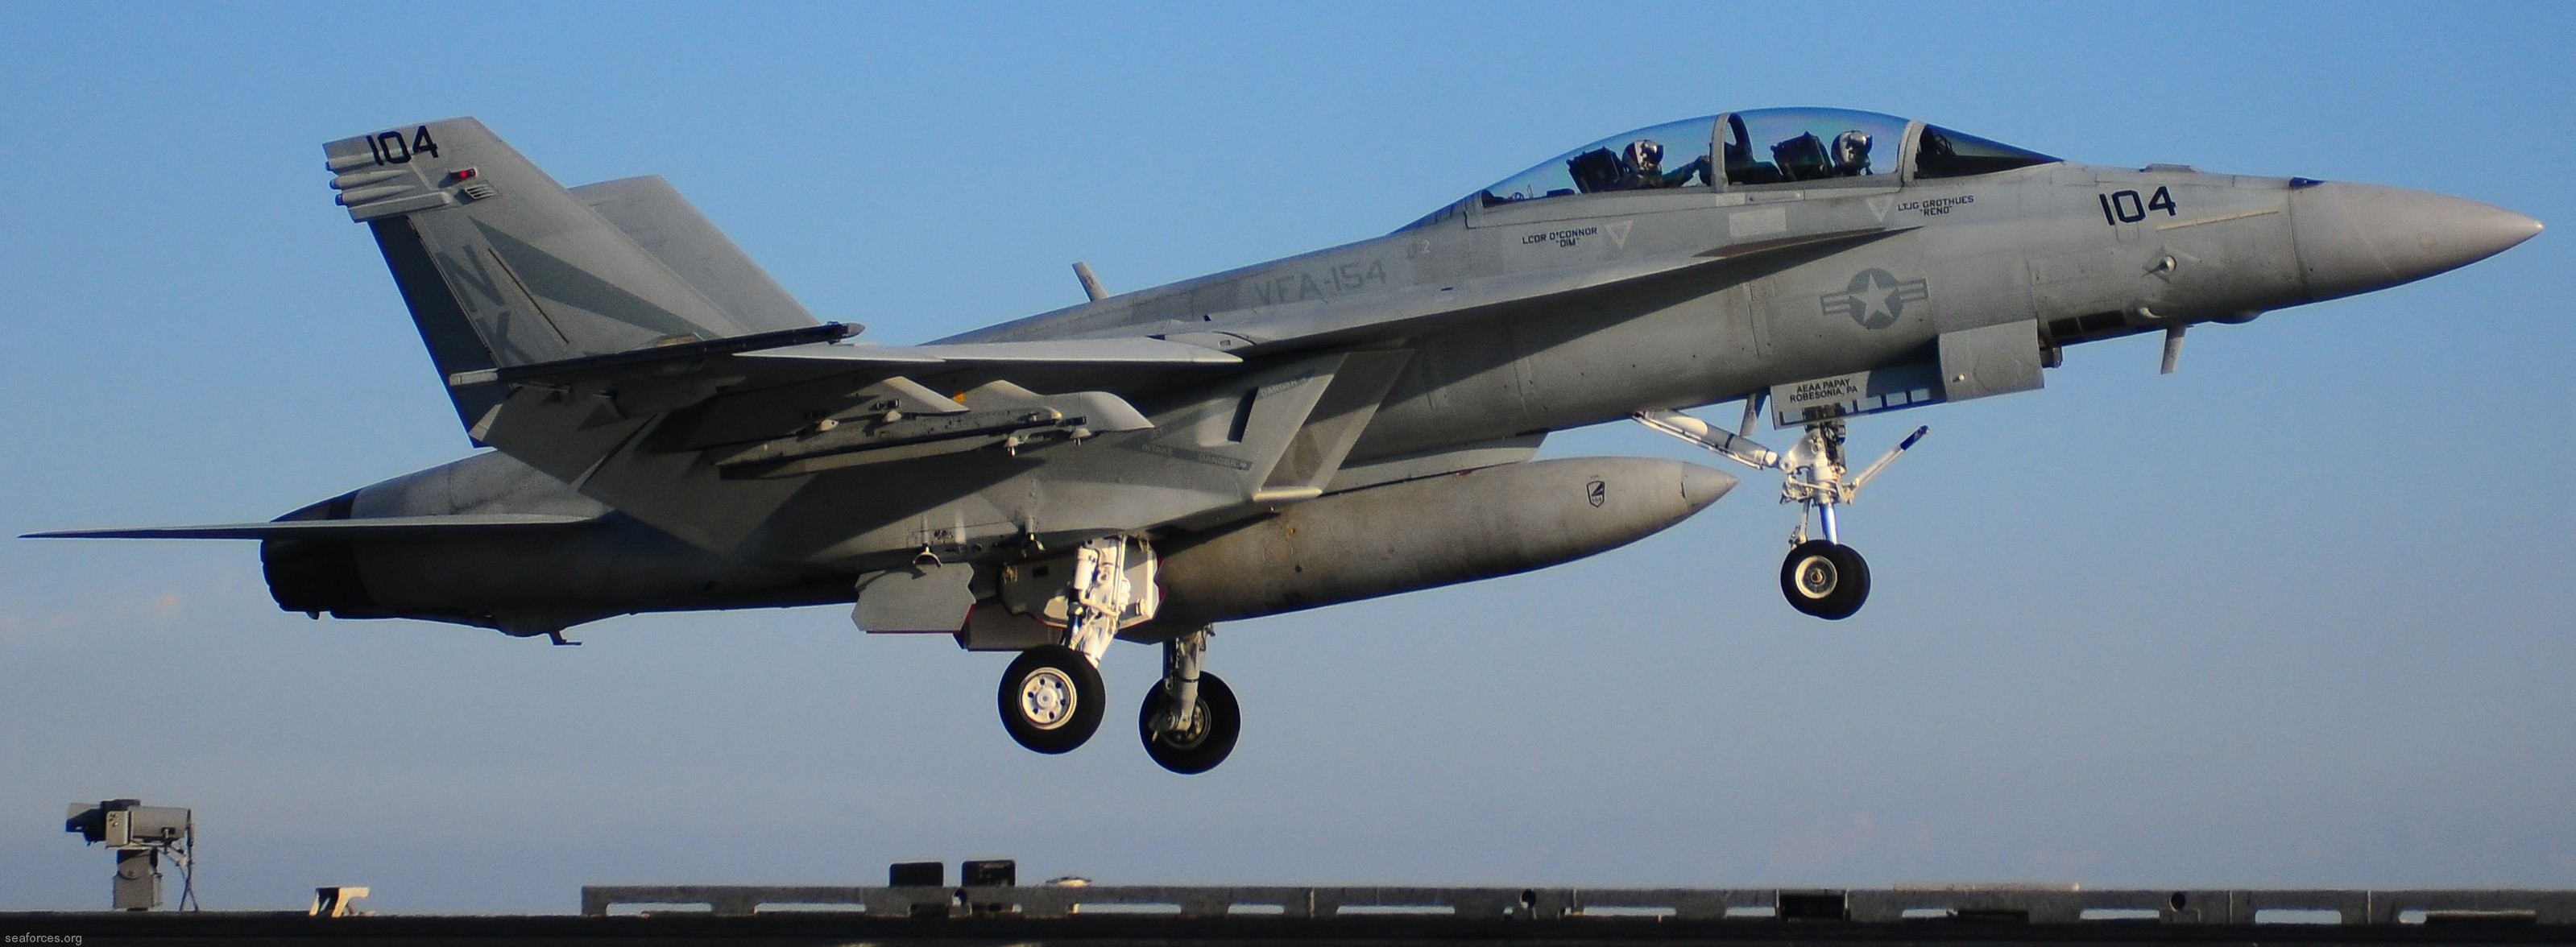 vfa-154 black knights strike fighter squadron navy f/a-18f super hornet carrier air wing cvw-14 uss ronald reagan cvn-76 101